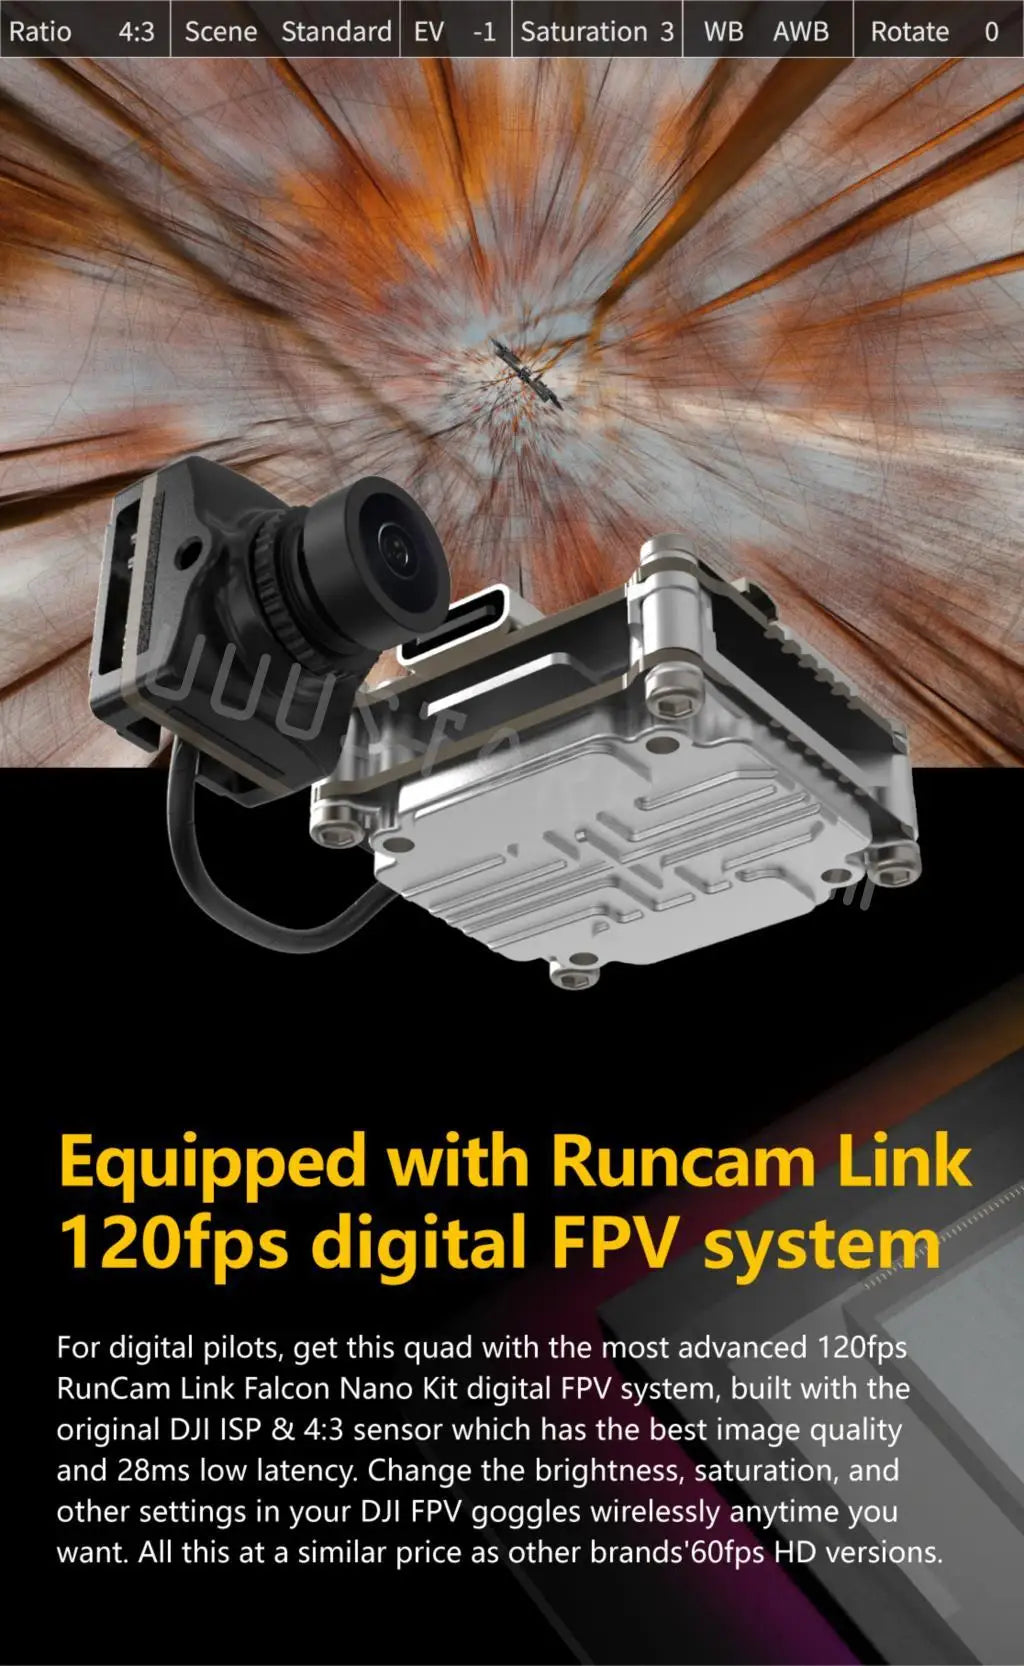 SpeedyBee Flex25, get this quad with the most advanced RunCam Link Falcon Nano kit digital FPV system